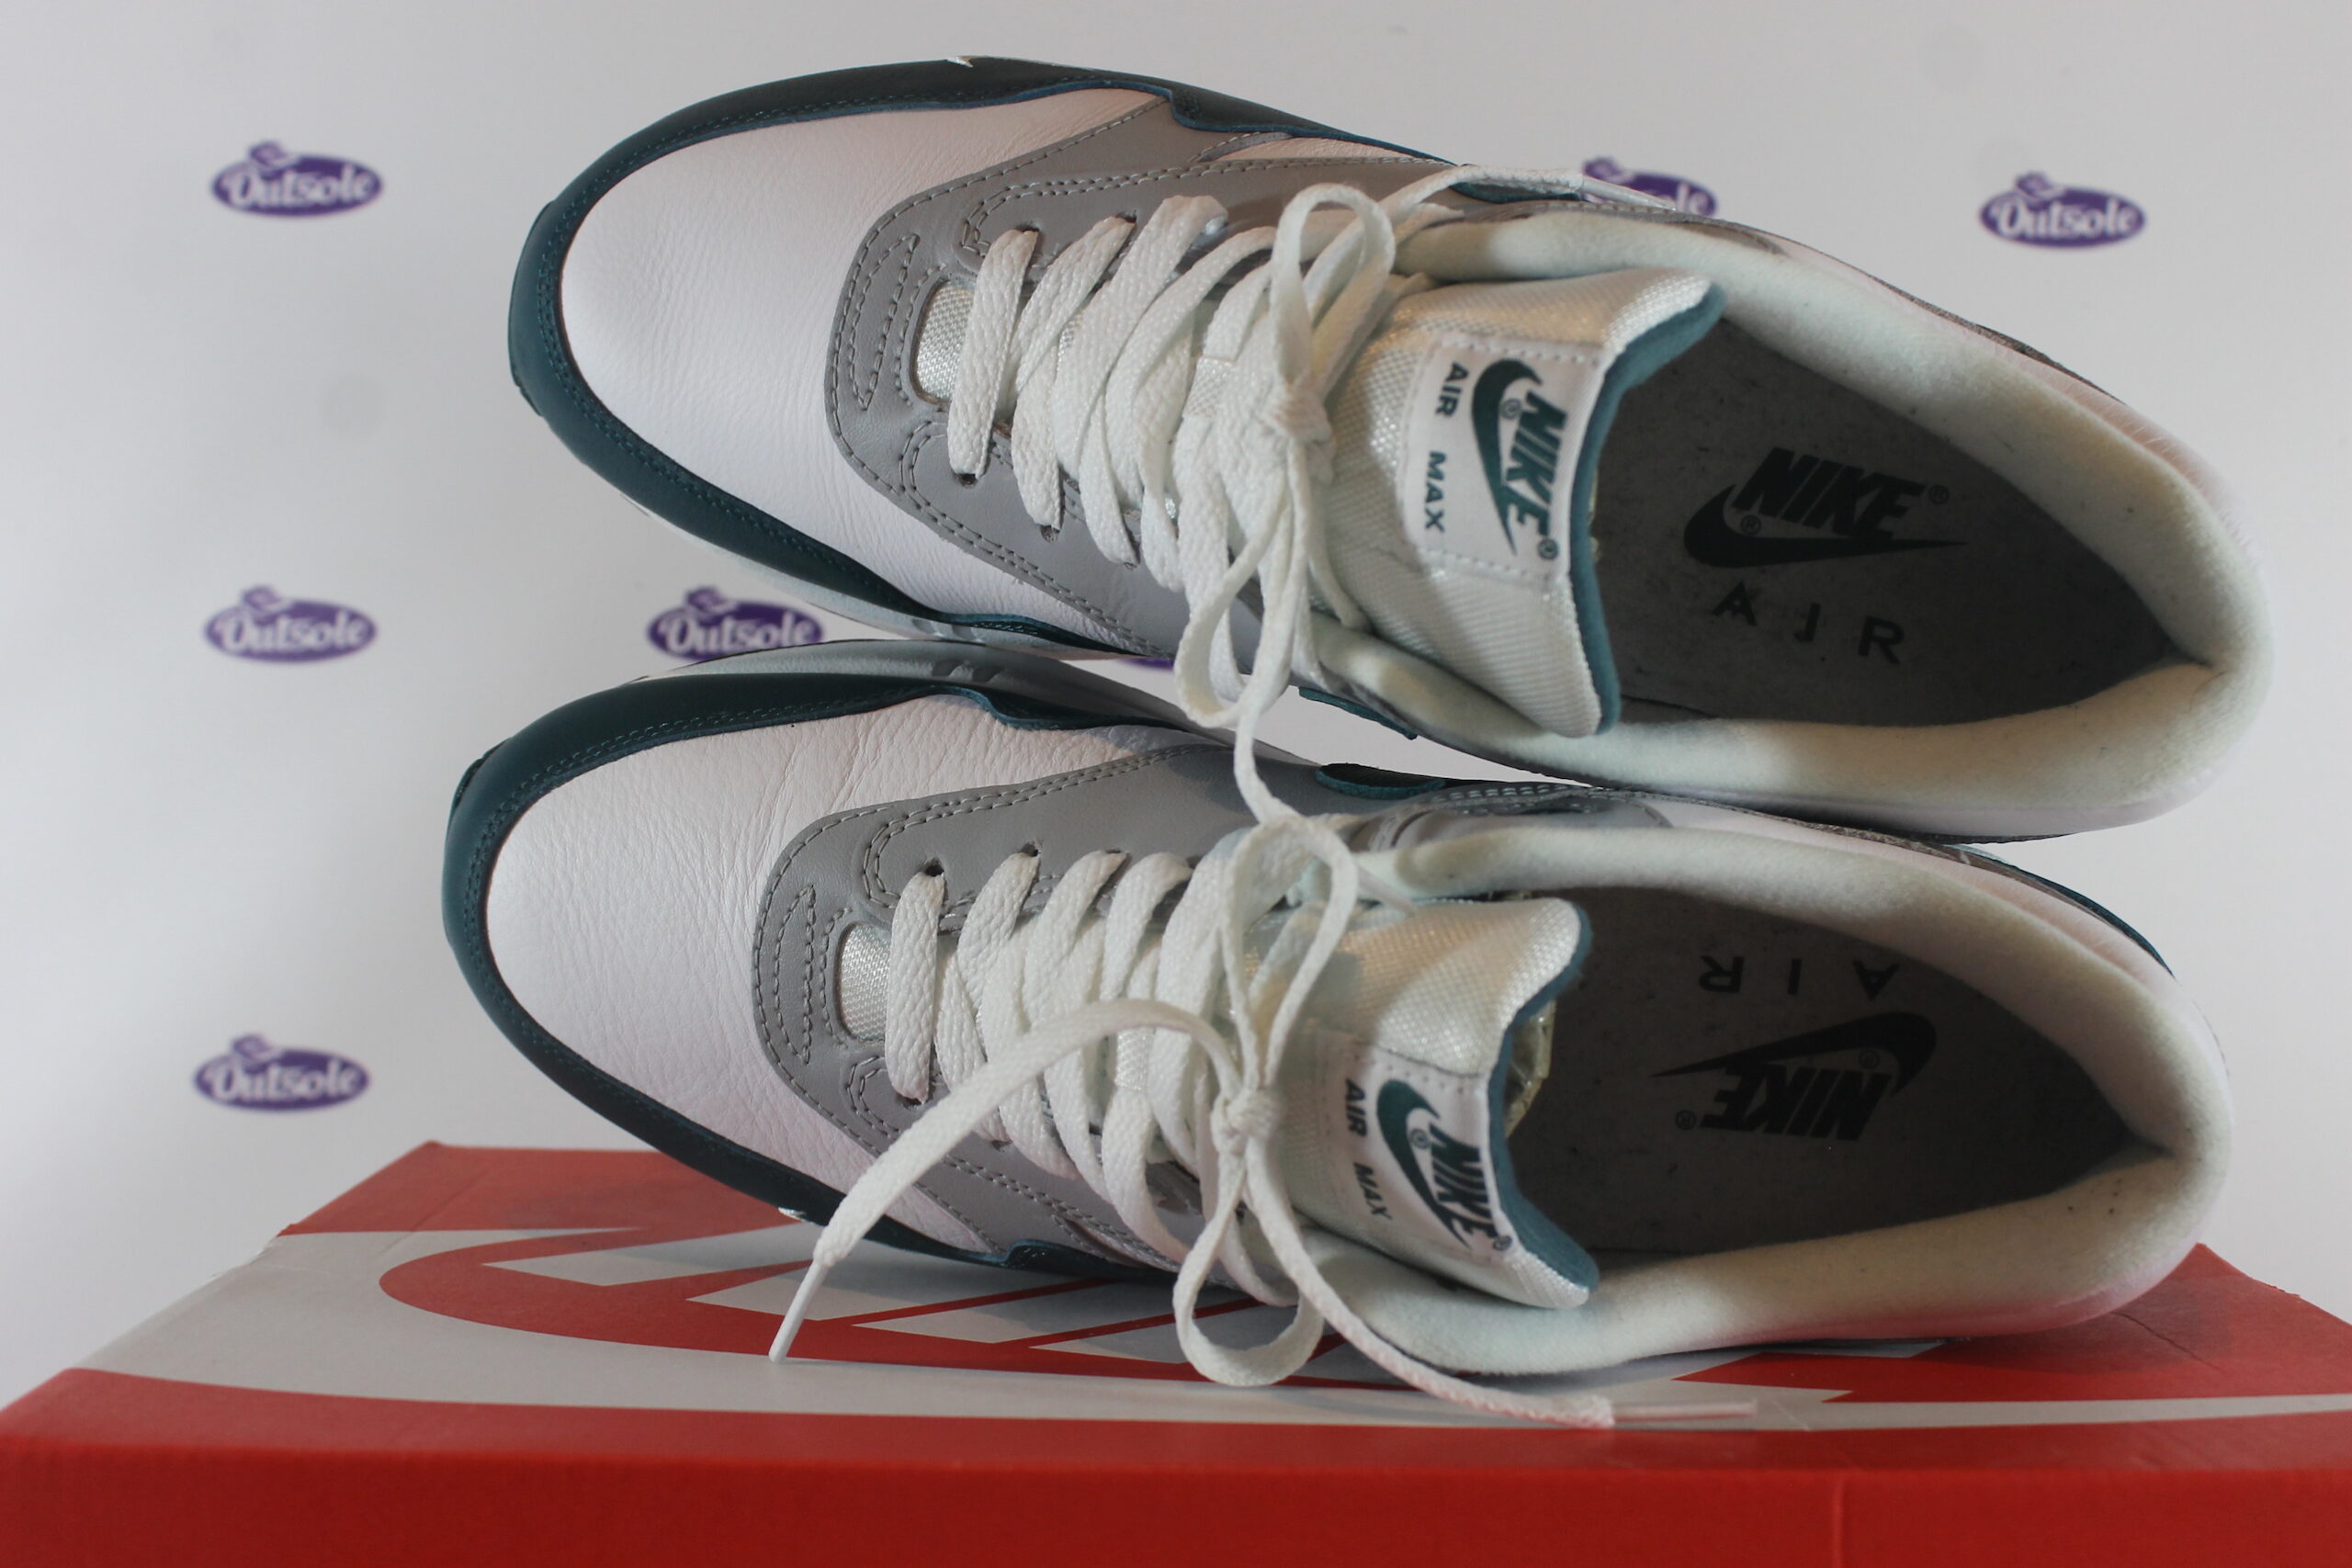 Nike Air Max 1 LV8 Dark Teal Green Shoes Men’s Size 8.5 (DH4059-101)